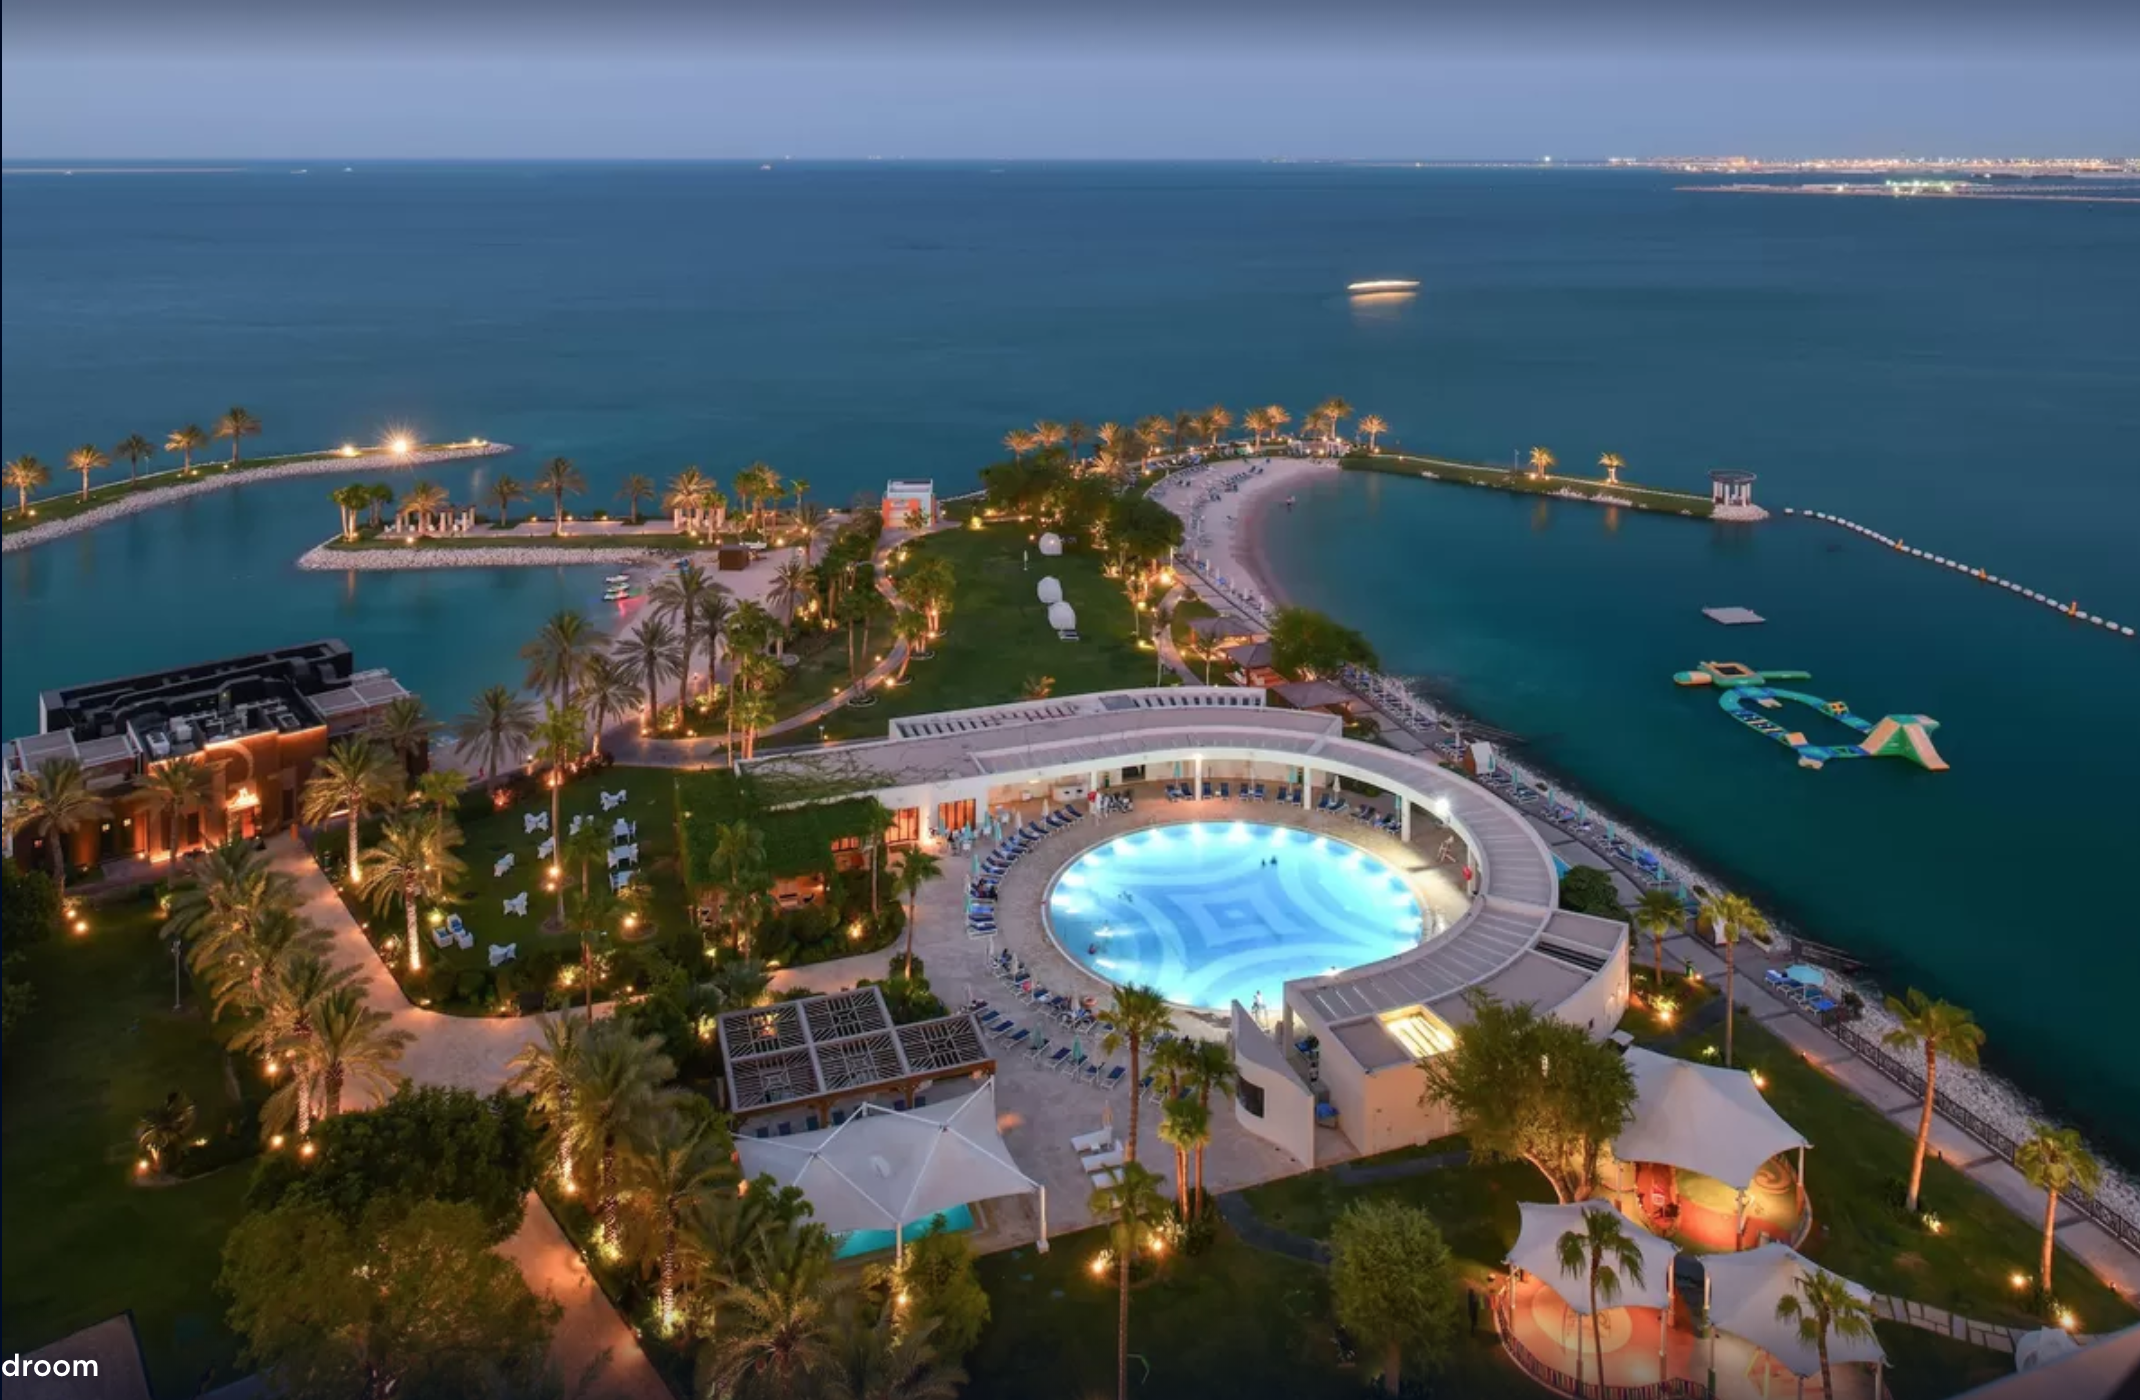 view of Arabian sea and swimming pool at Sheraton Grand Doha Resort